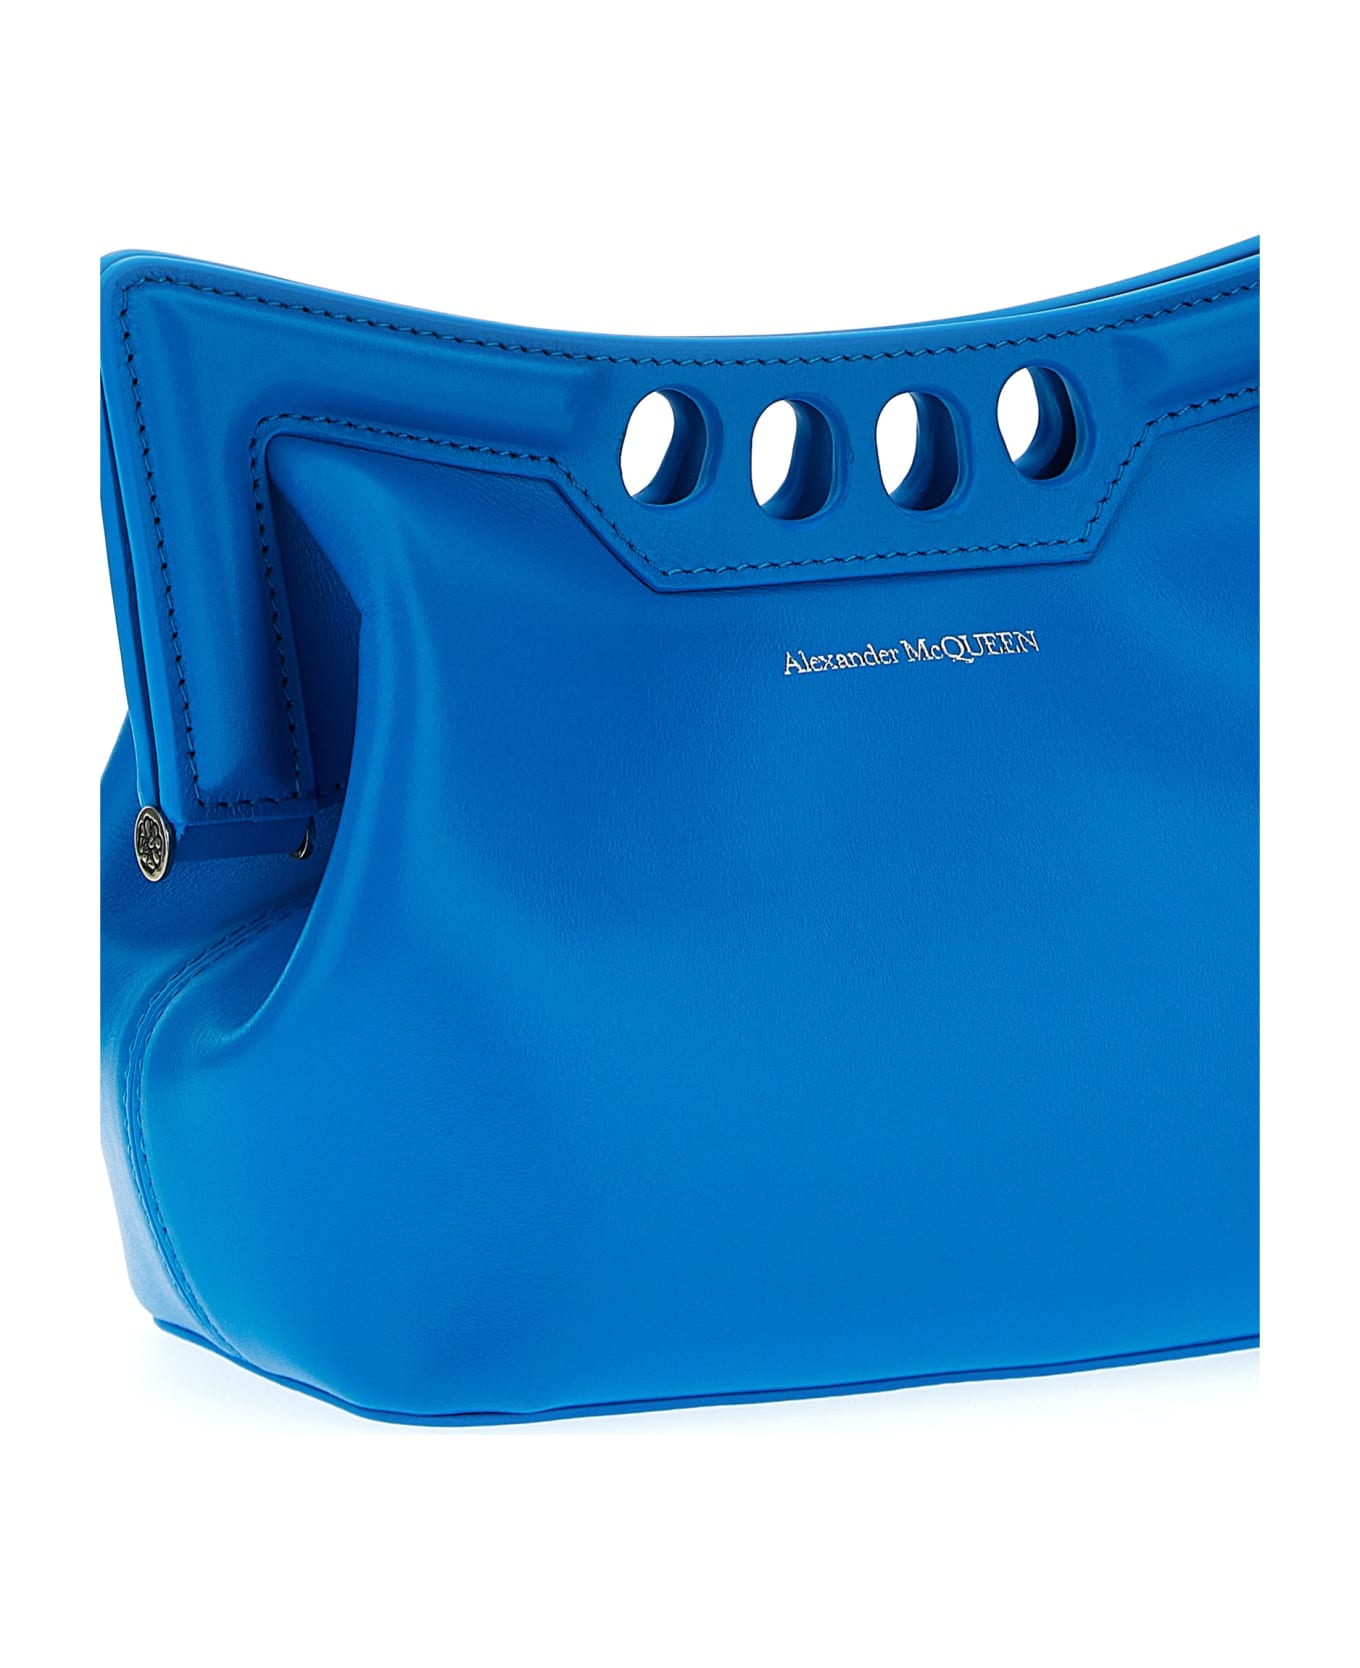 Alexander McQueen Peak Mini Shoulder Bag - Blu